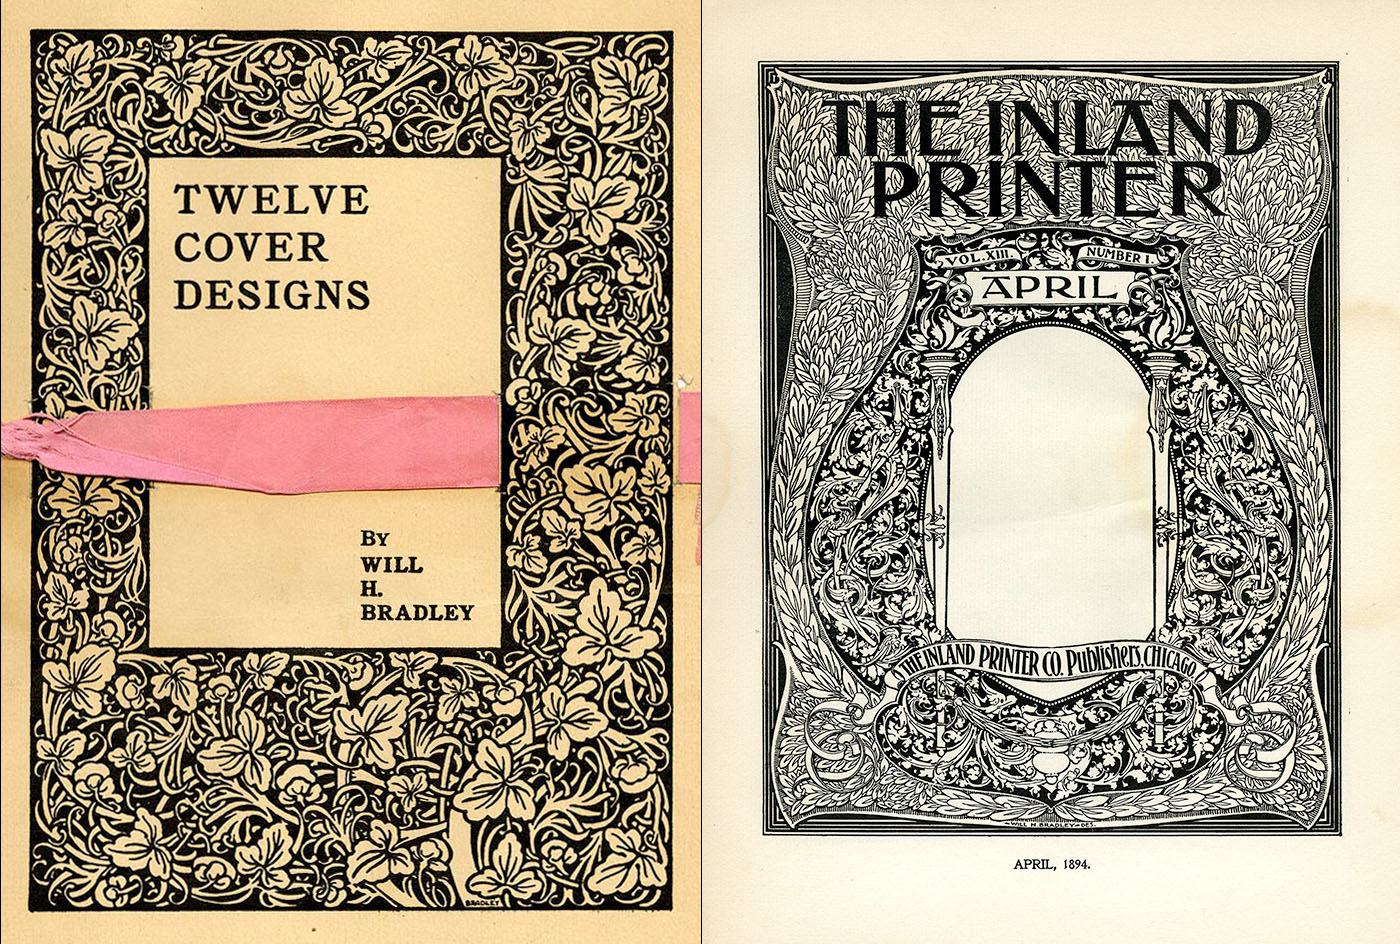 Twelve Cover Designs By Will H. Bradley